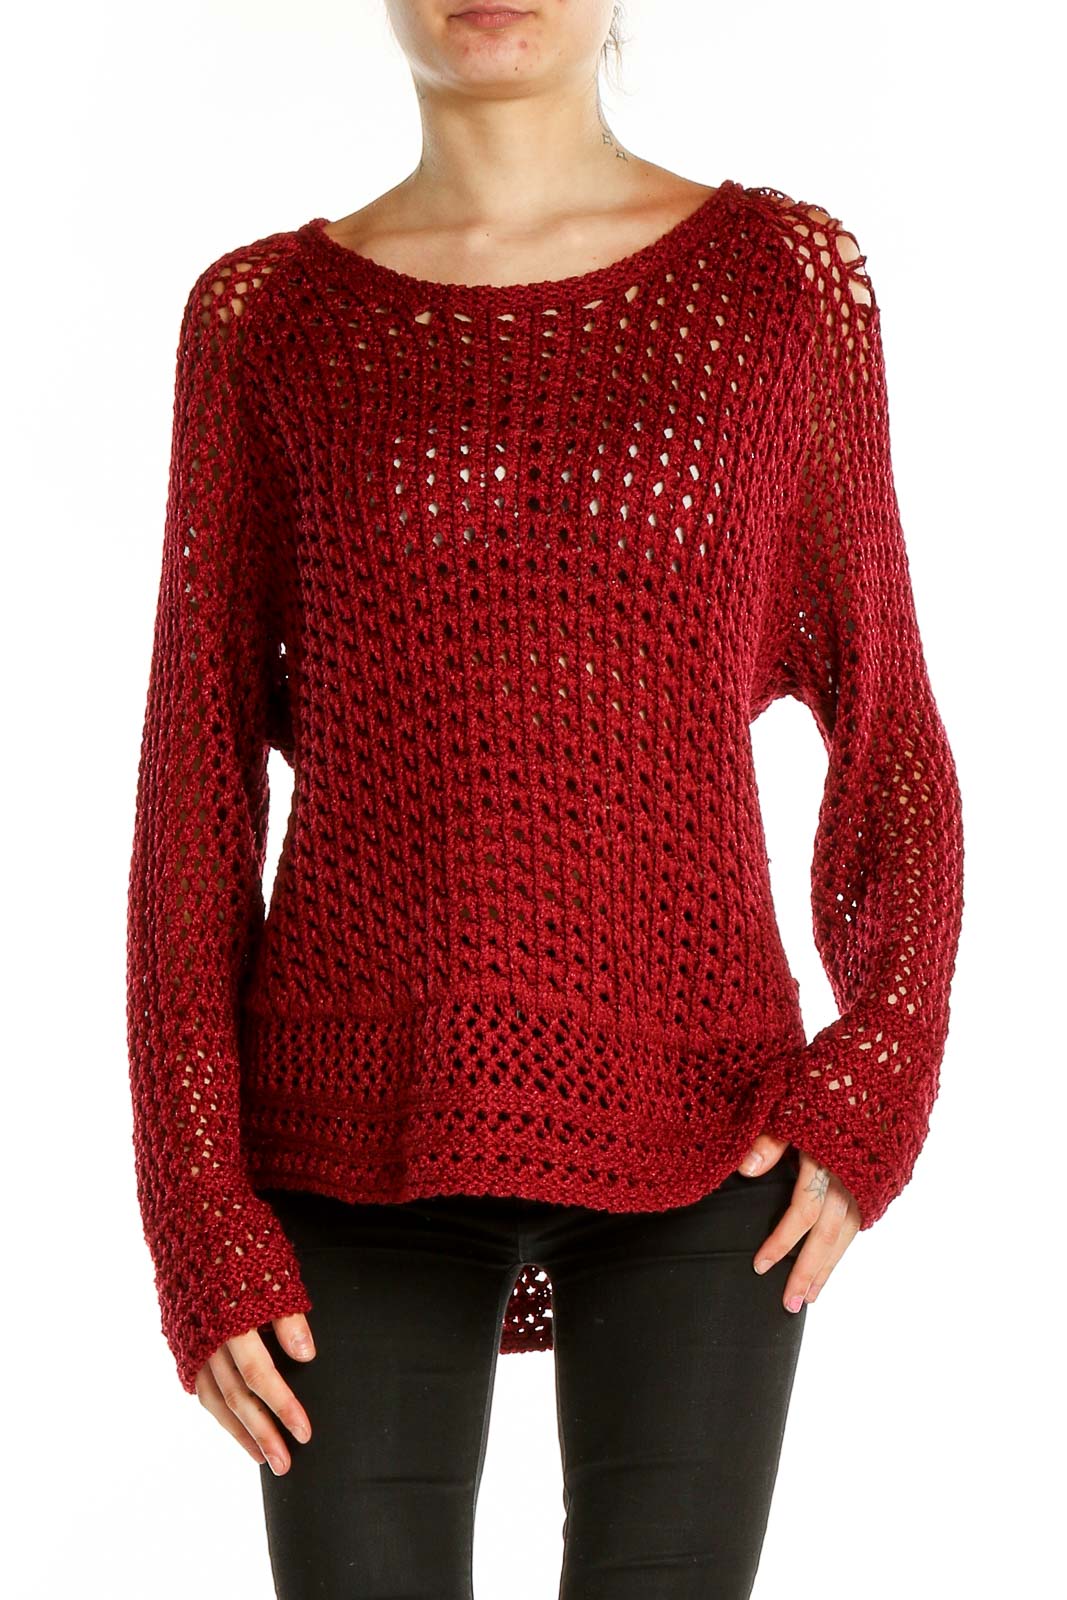 Red Crochet Top Front